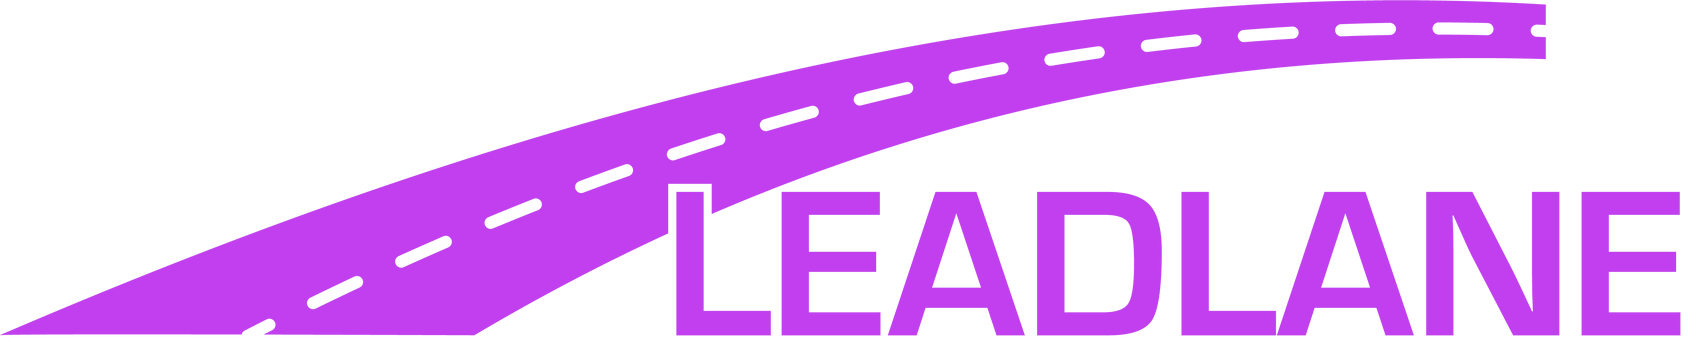 Lead Generation Company Logo | LeadLane